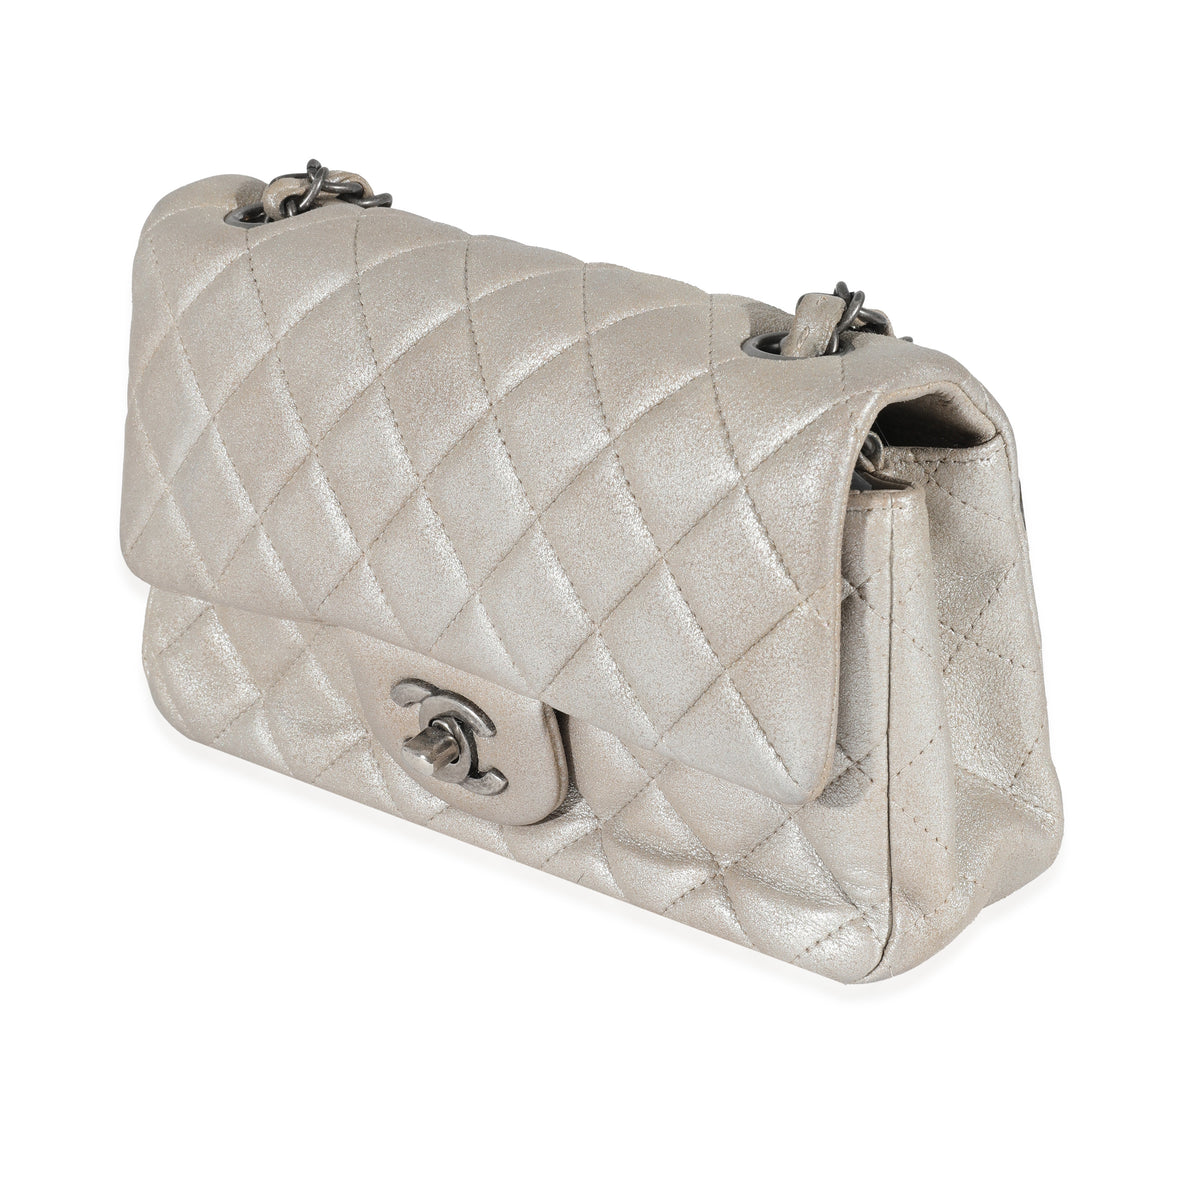 Chanel Silver Metallic Quilted Caviar Medium Classic Double Flap Bag, myGemma